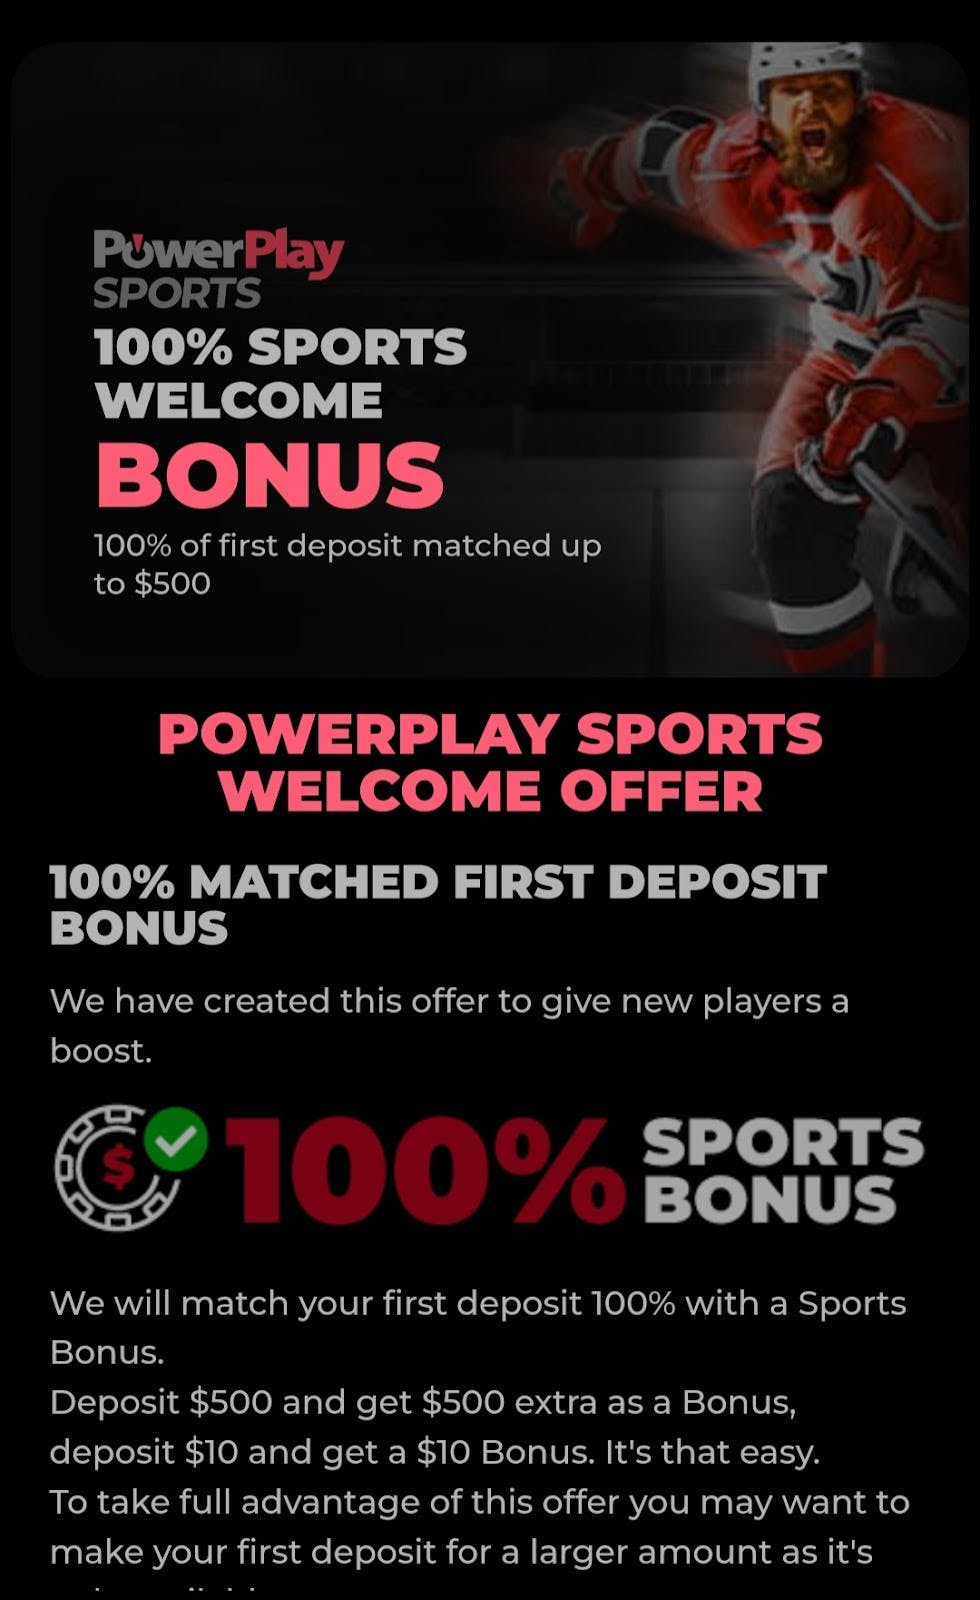 sports bonus campaign at powerplay